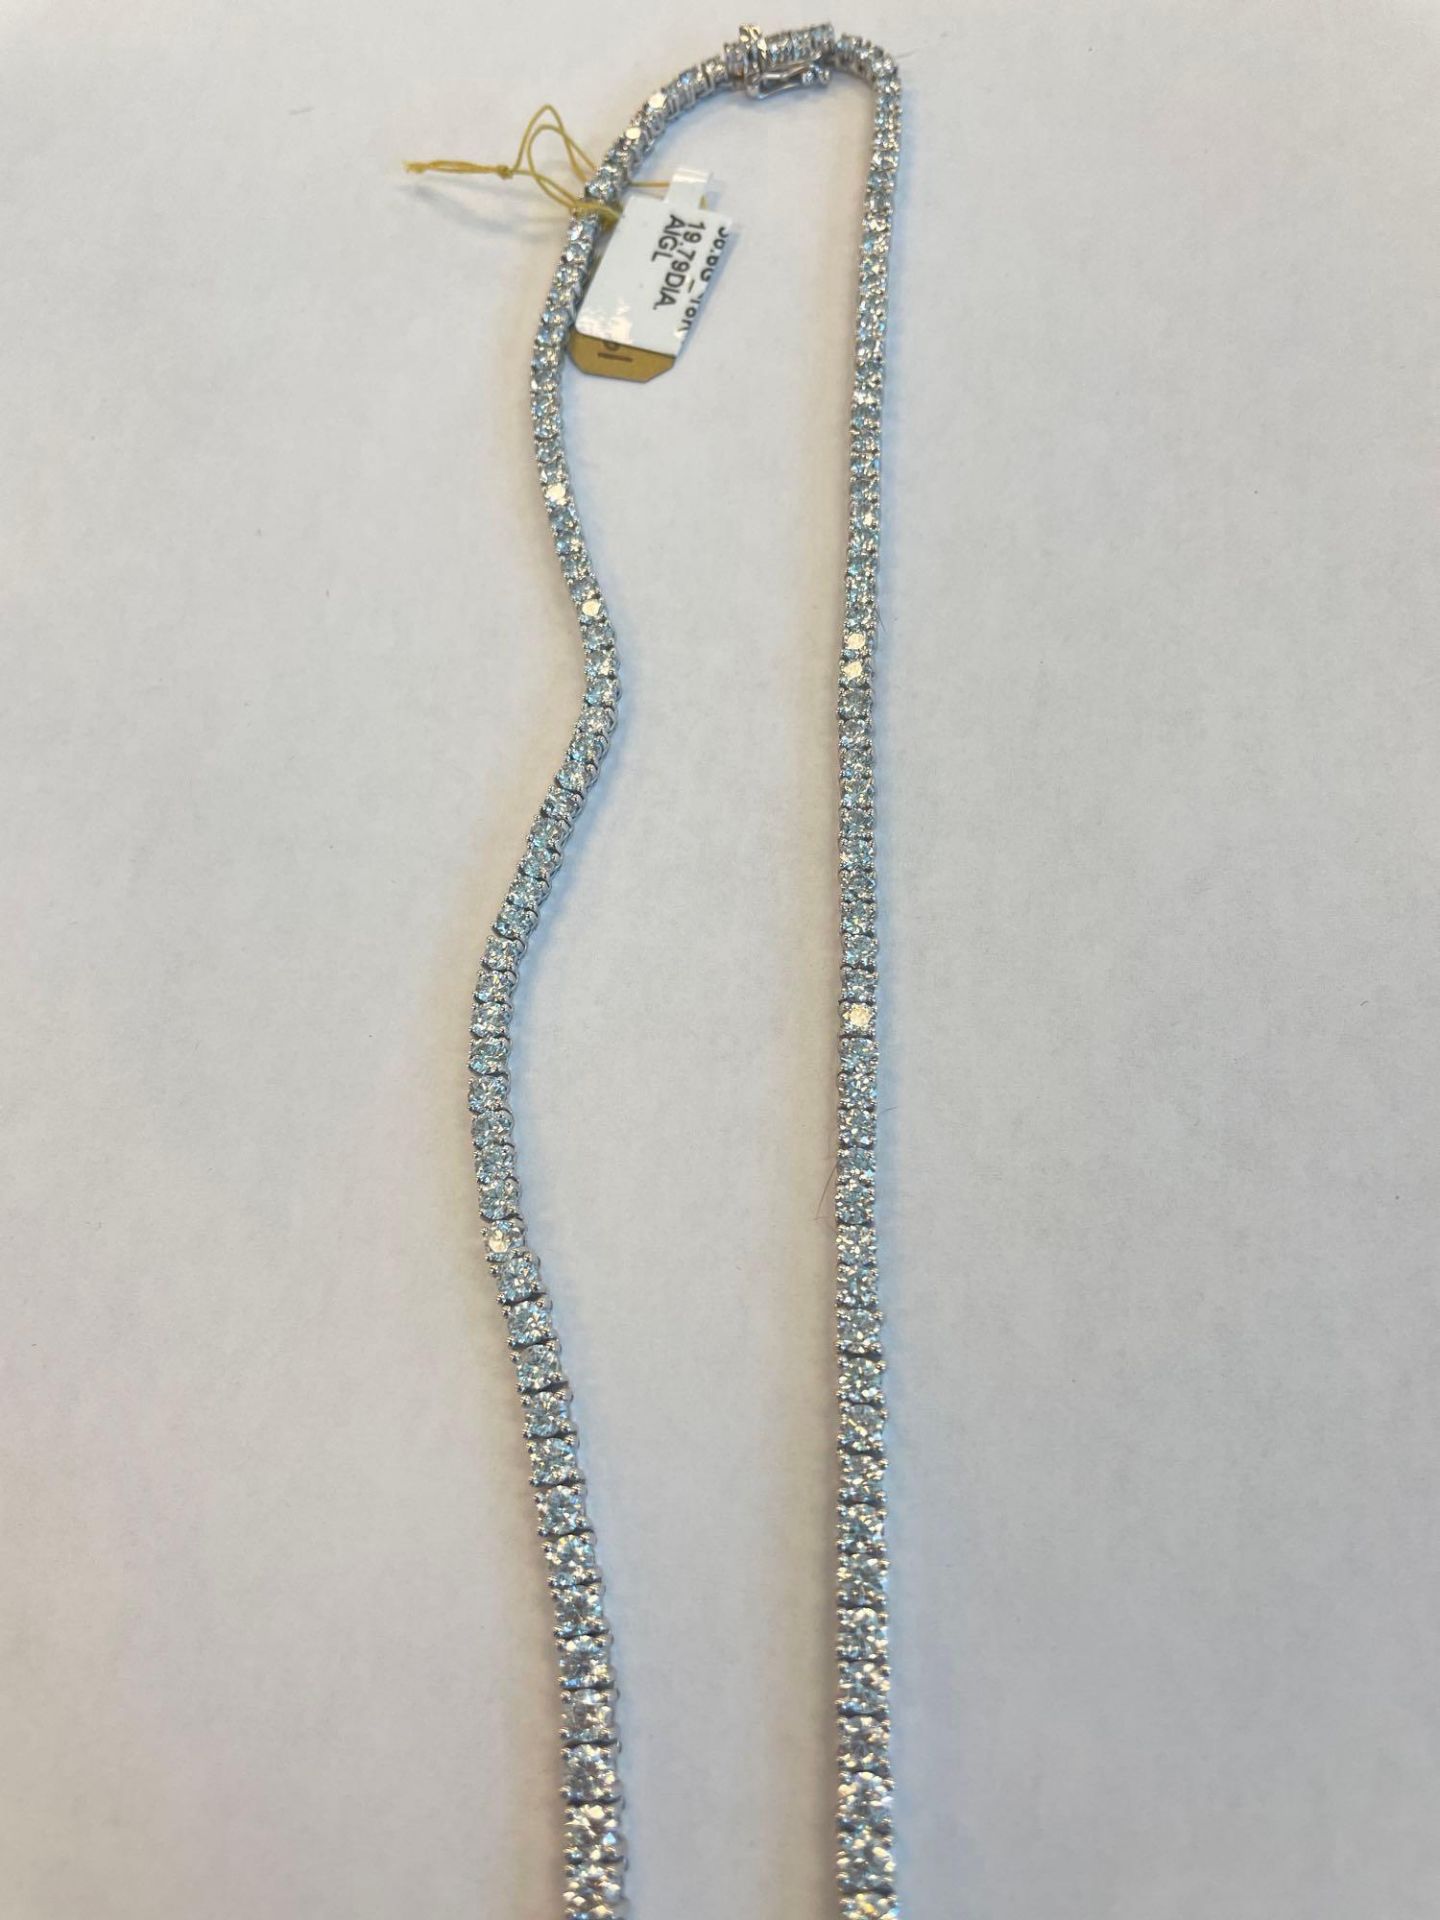 18KT Diamond Necklace 19.79 cts diamond - Image 6 of 7